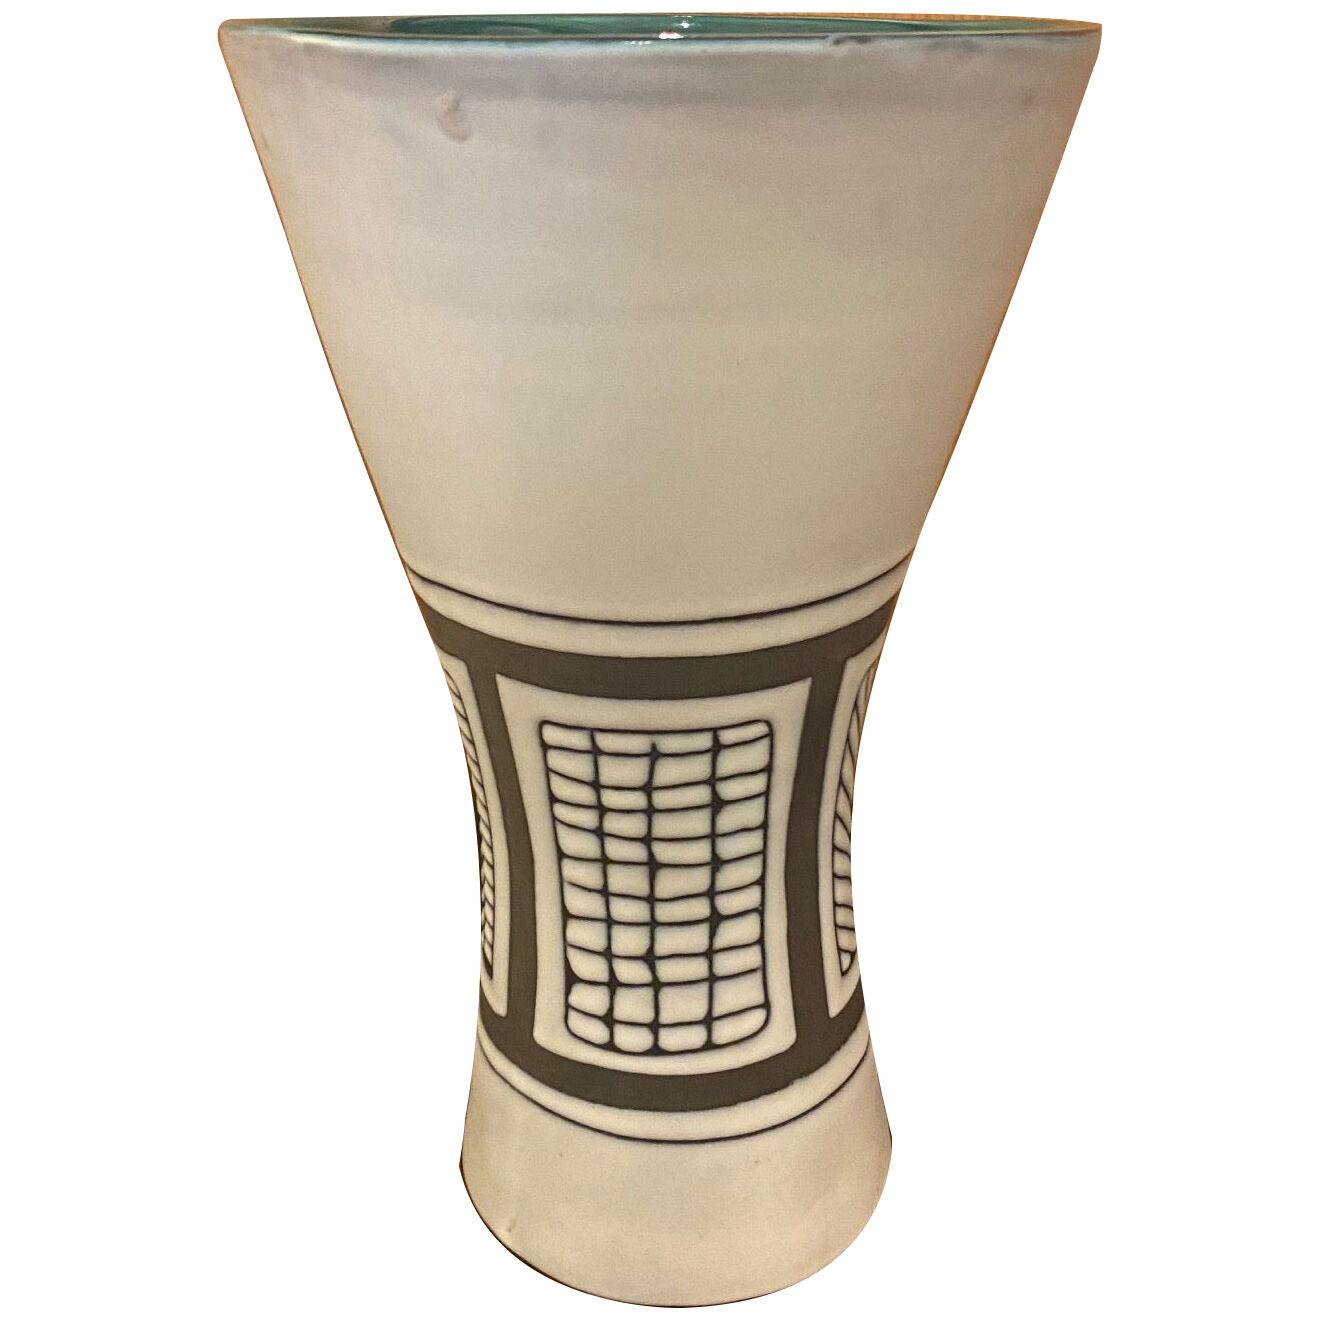 "Diabolo" ceramic Vase by Roger Capron, Vallauris, France, 1960s